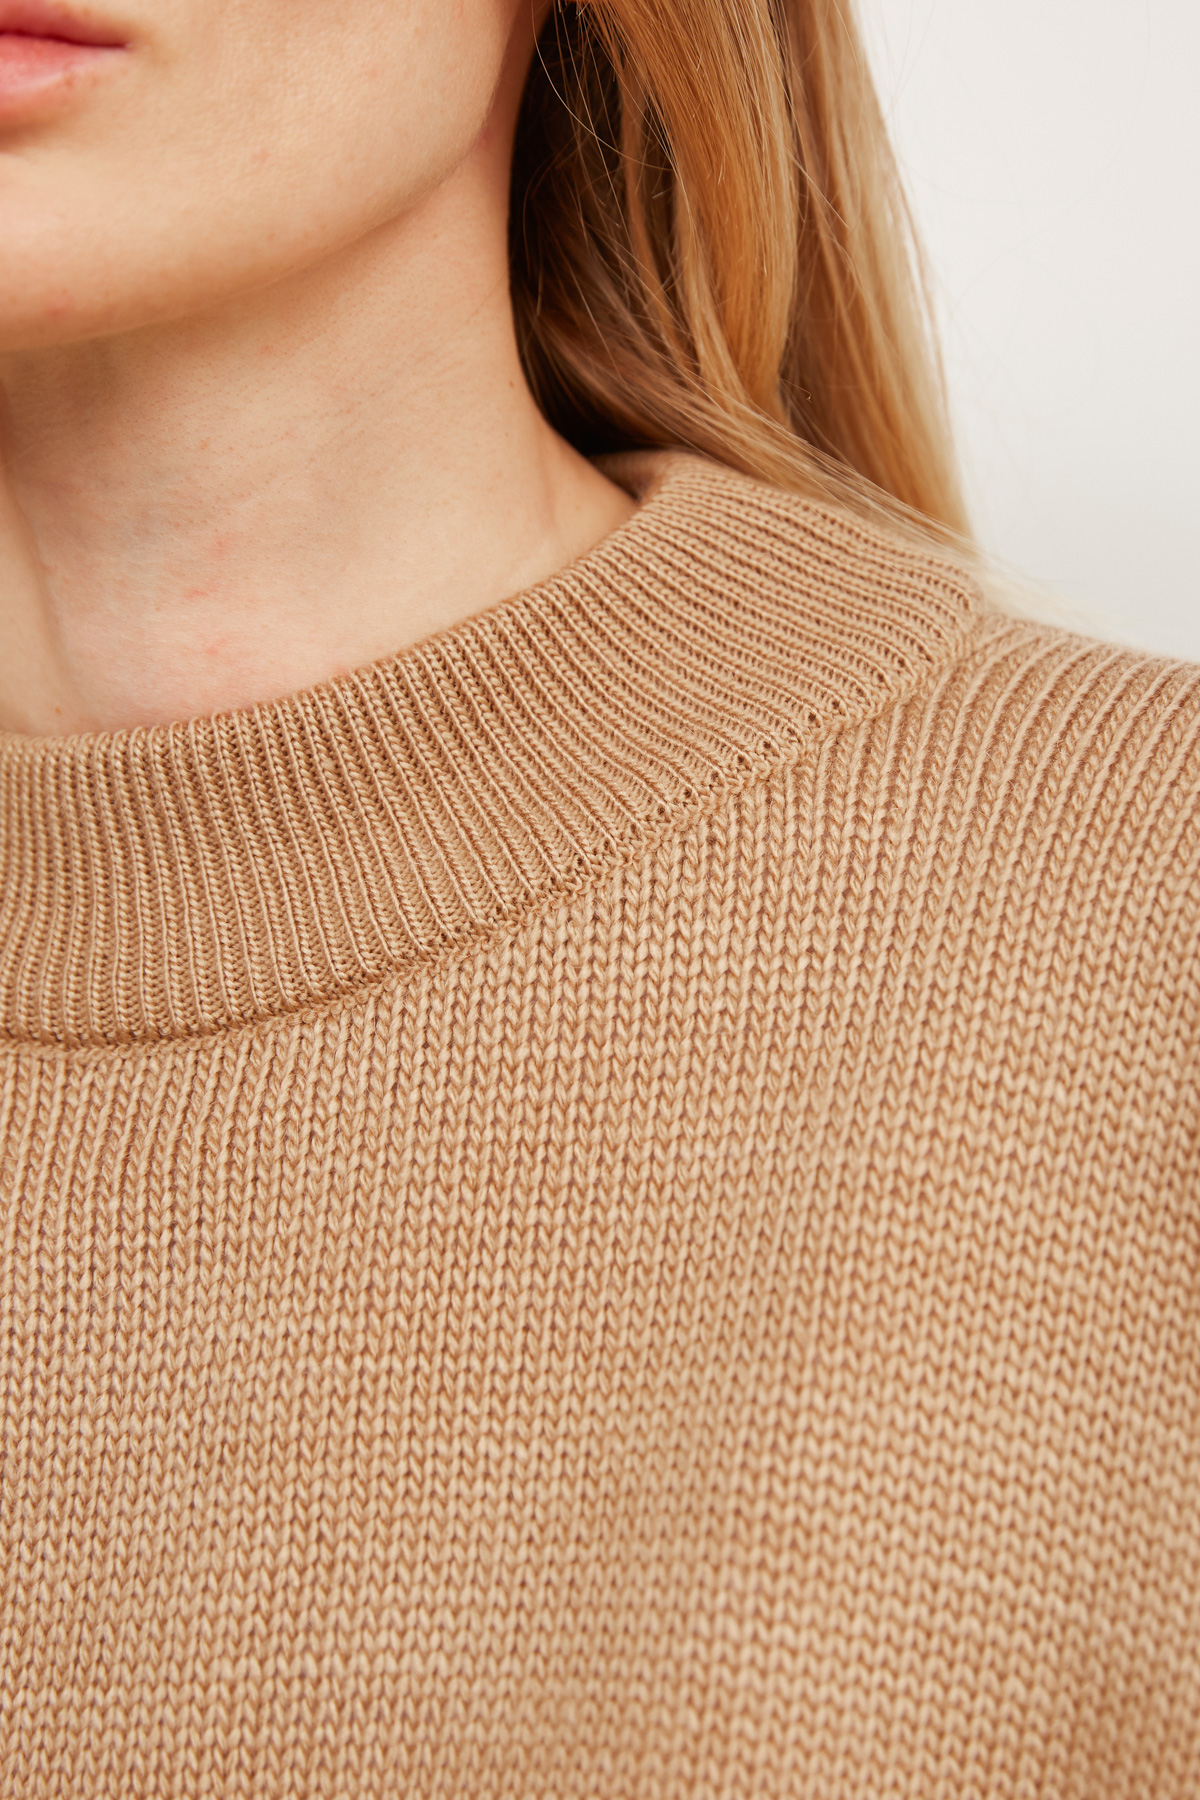 Beige knit sweater, photo 2